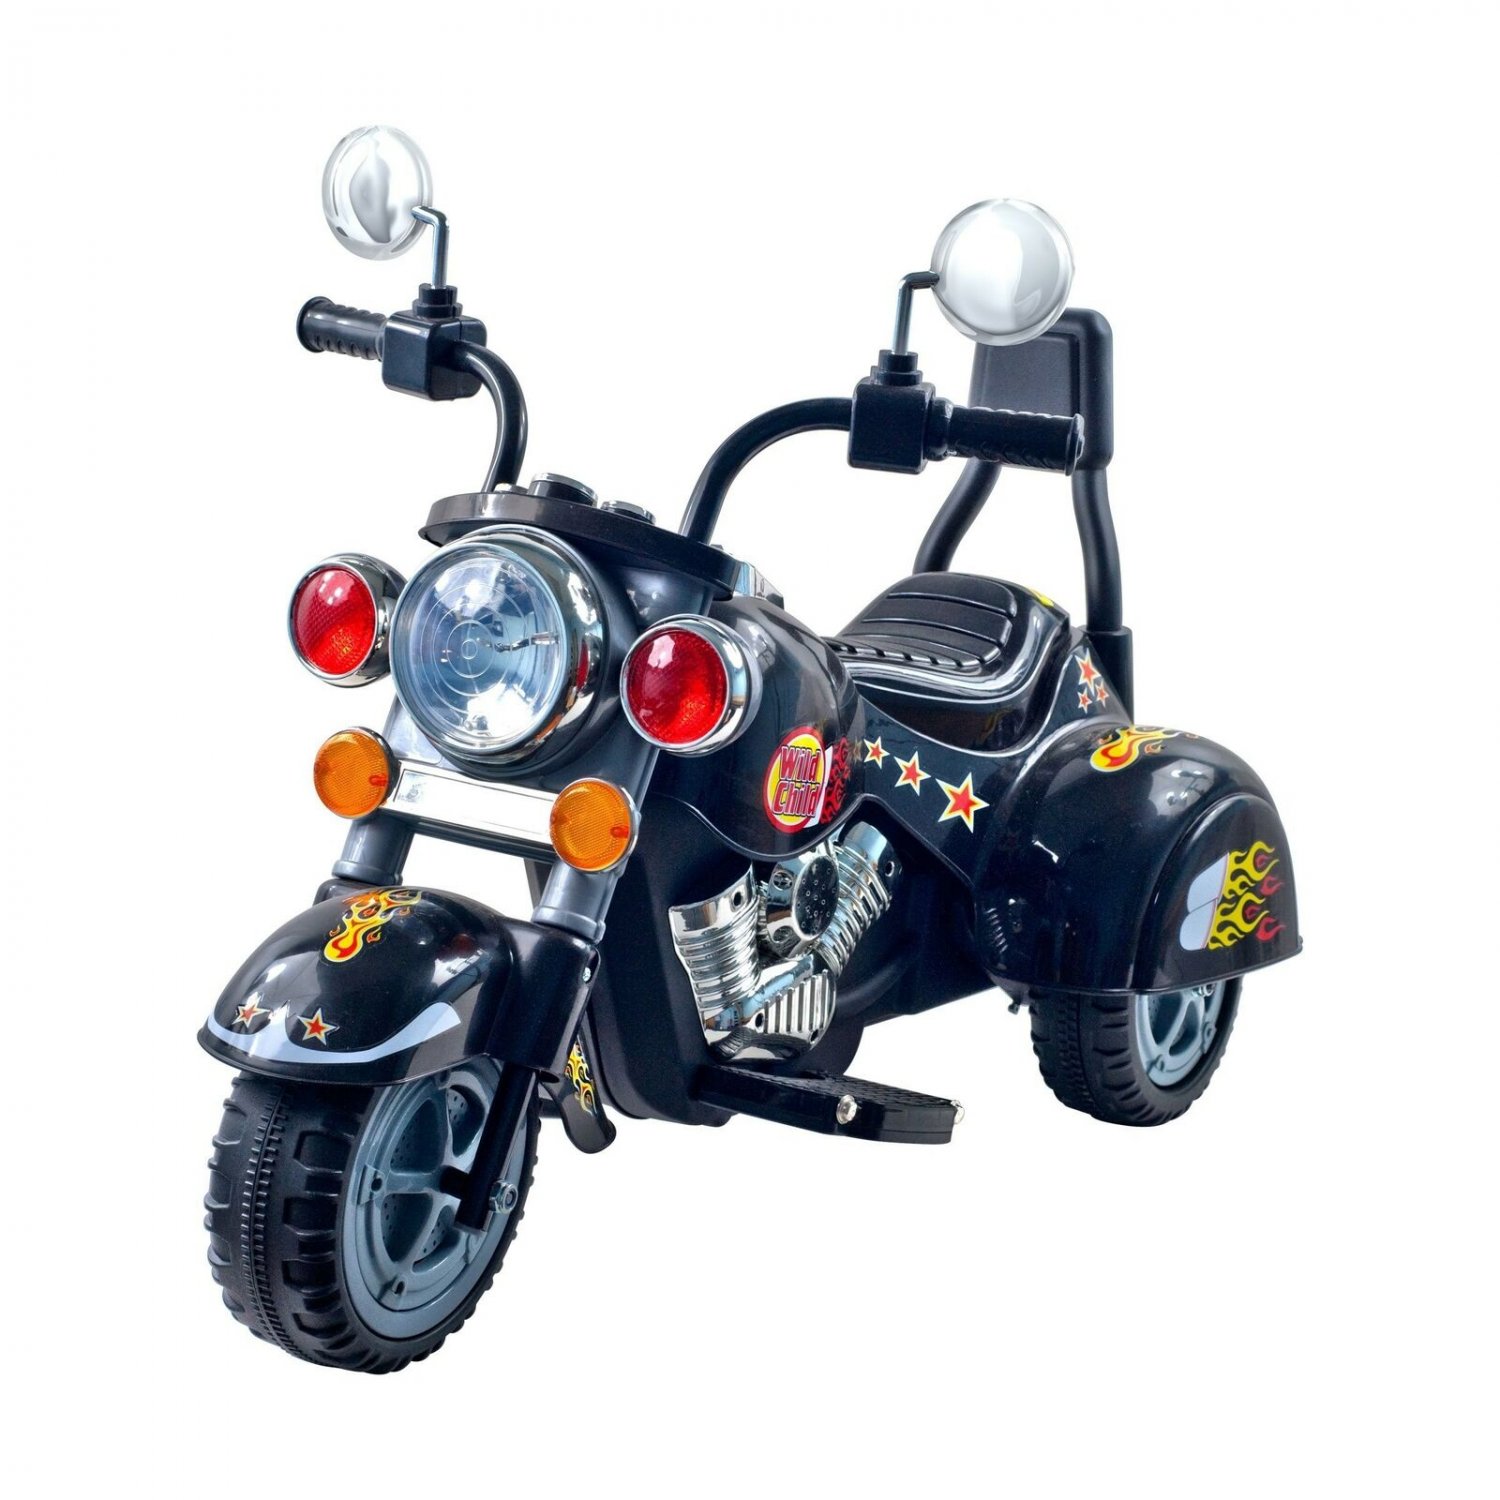 Lil' Rider Harley Style 3 Wheel Wild Child Motorcycle, Chopper Trike Motorcycle